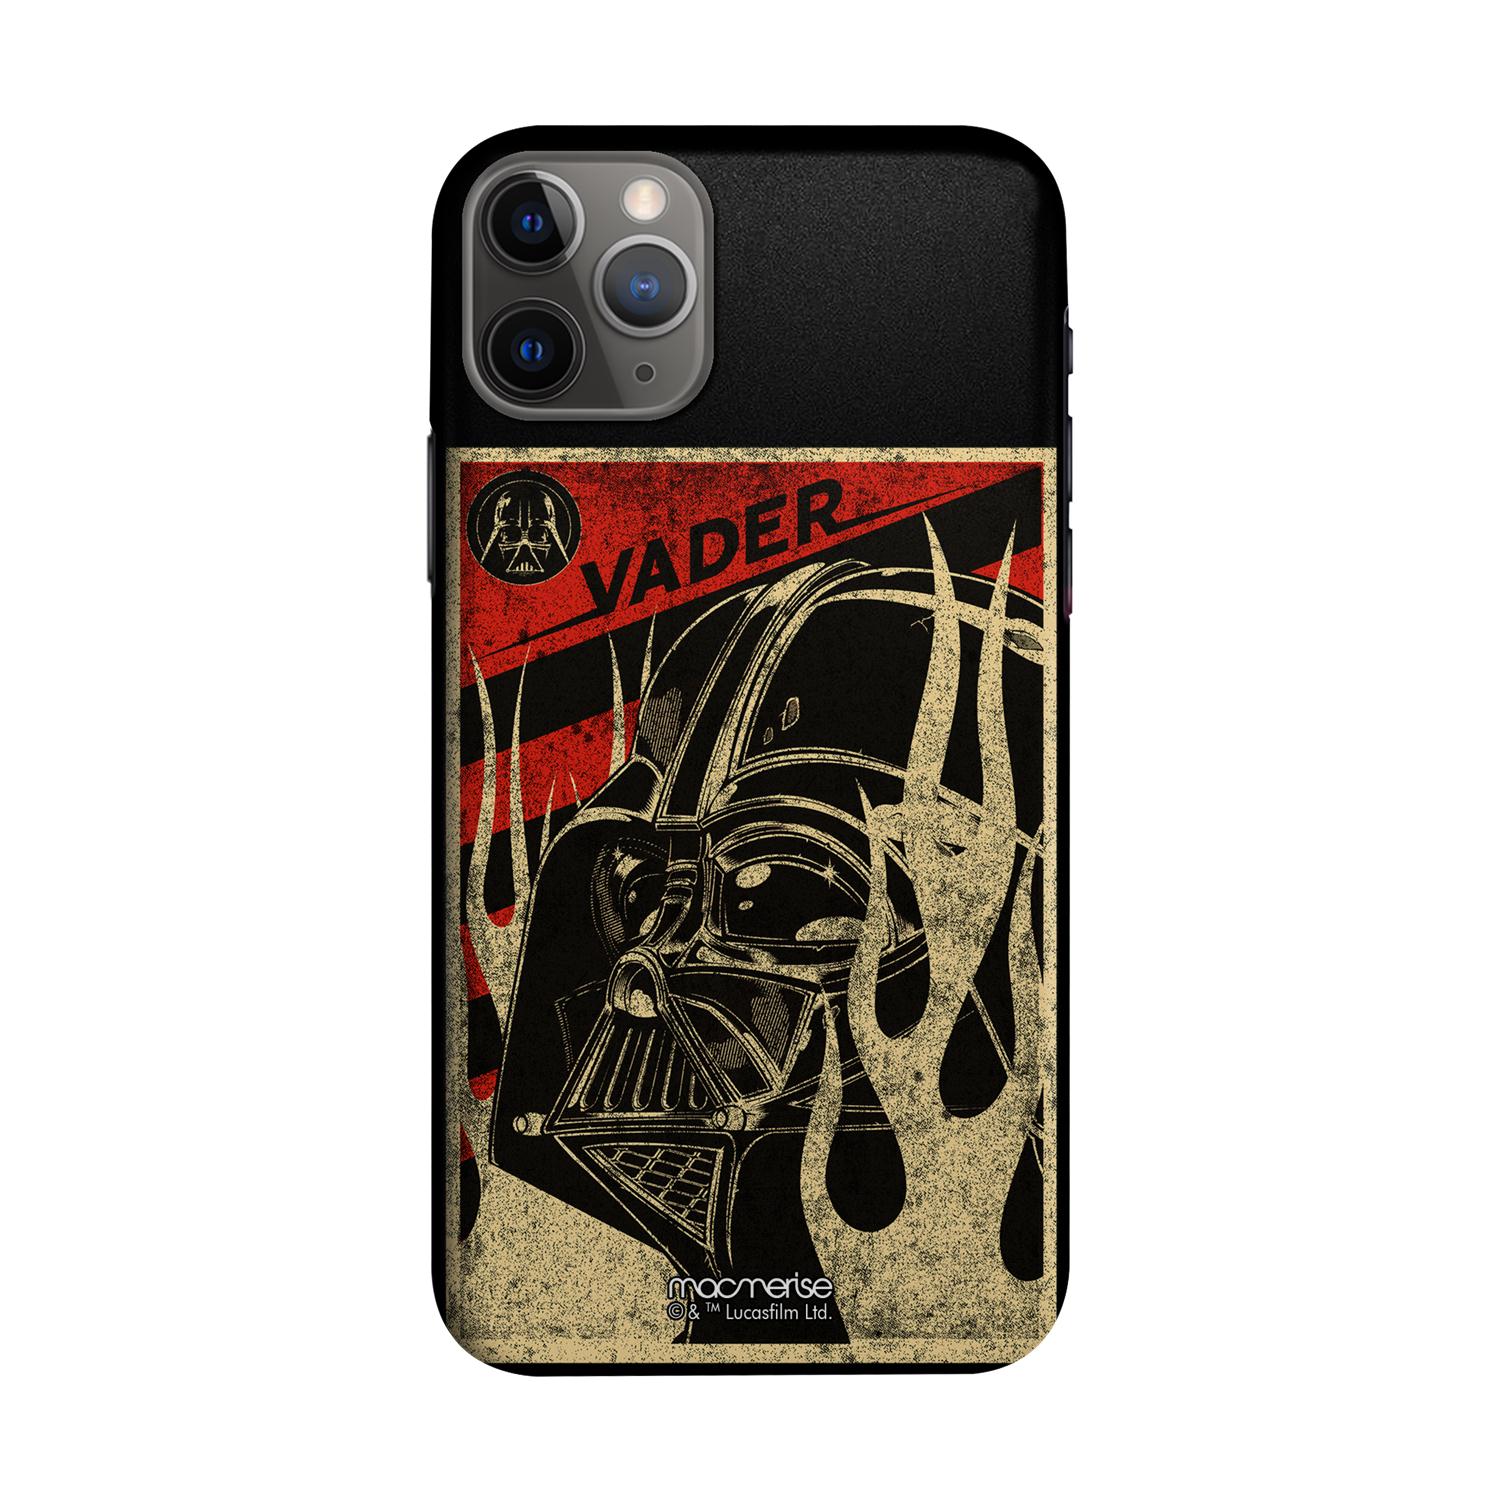 Buy Vader Stamp - Sleek Phone Case for iPhone 11 Pro Online